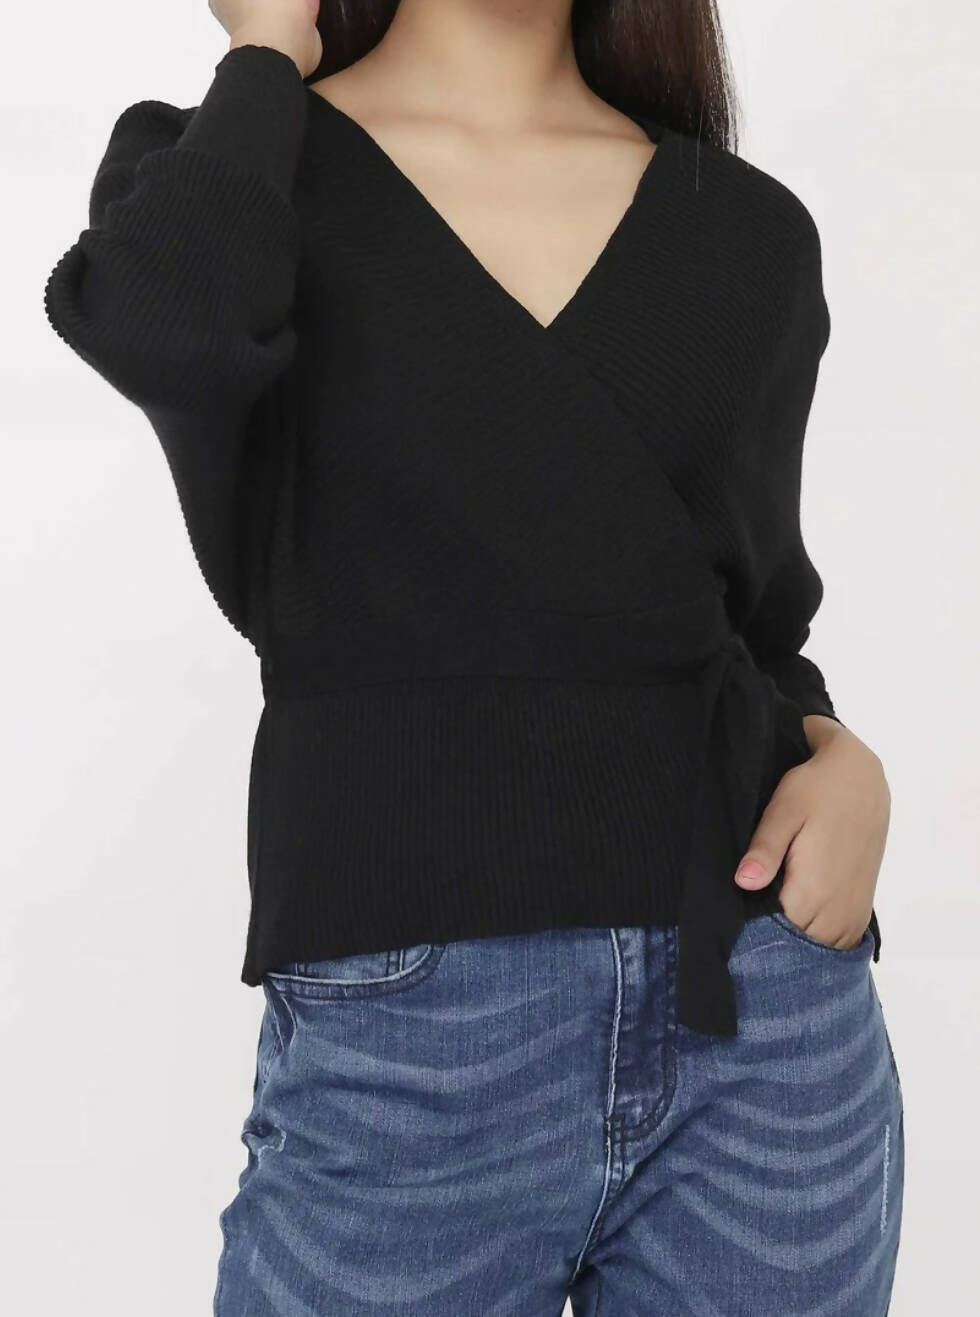 Black Knitted Top-Black | Women Tops & Shirts | Brand New